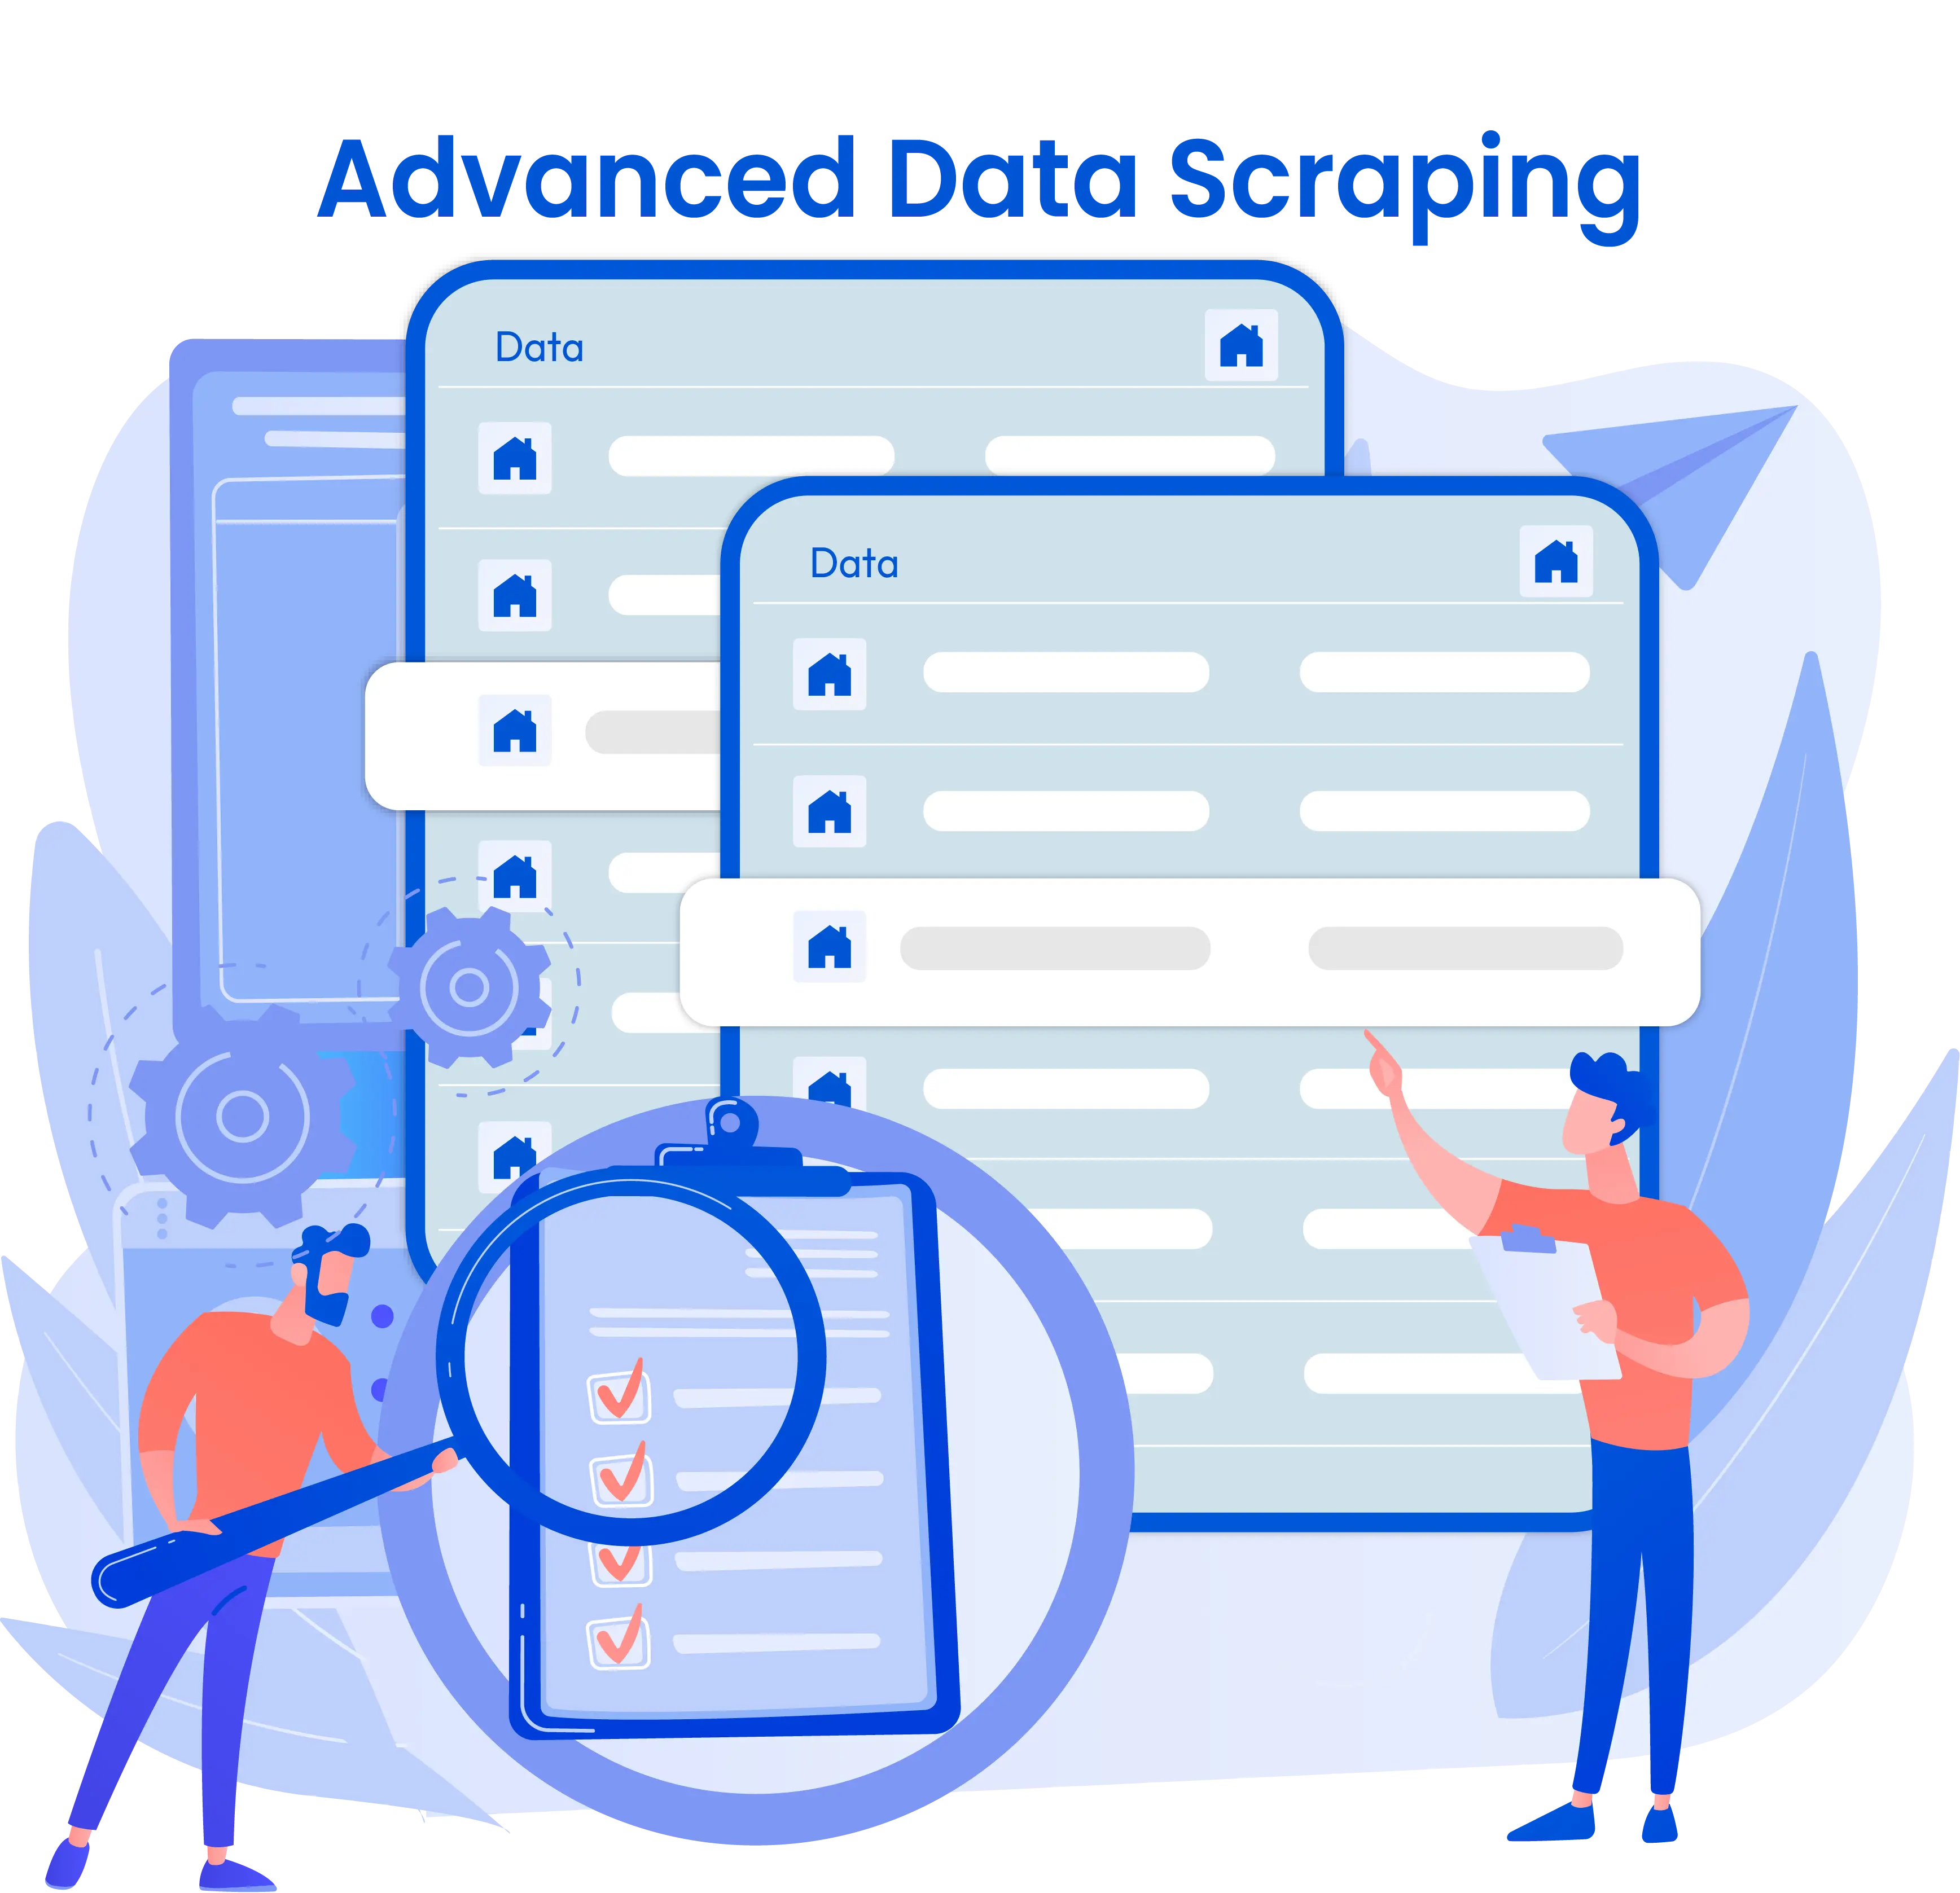 Advanced Data Scraping